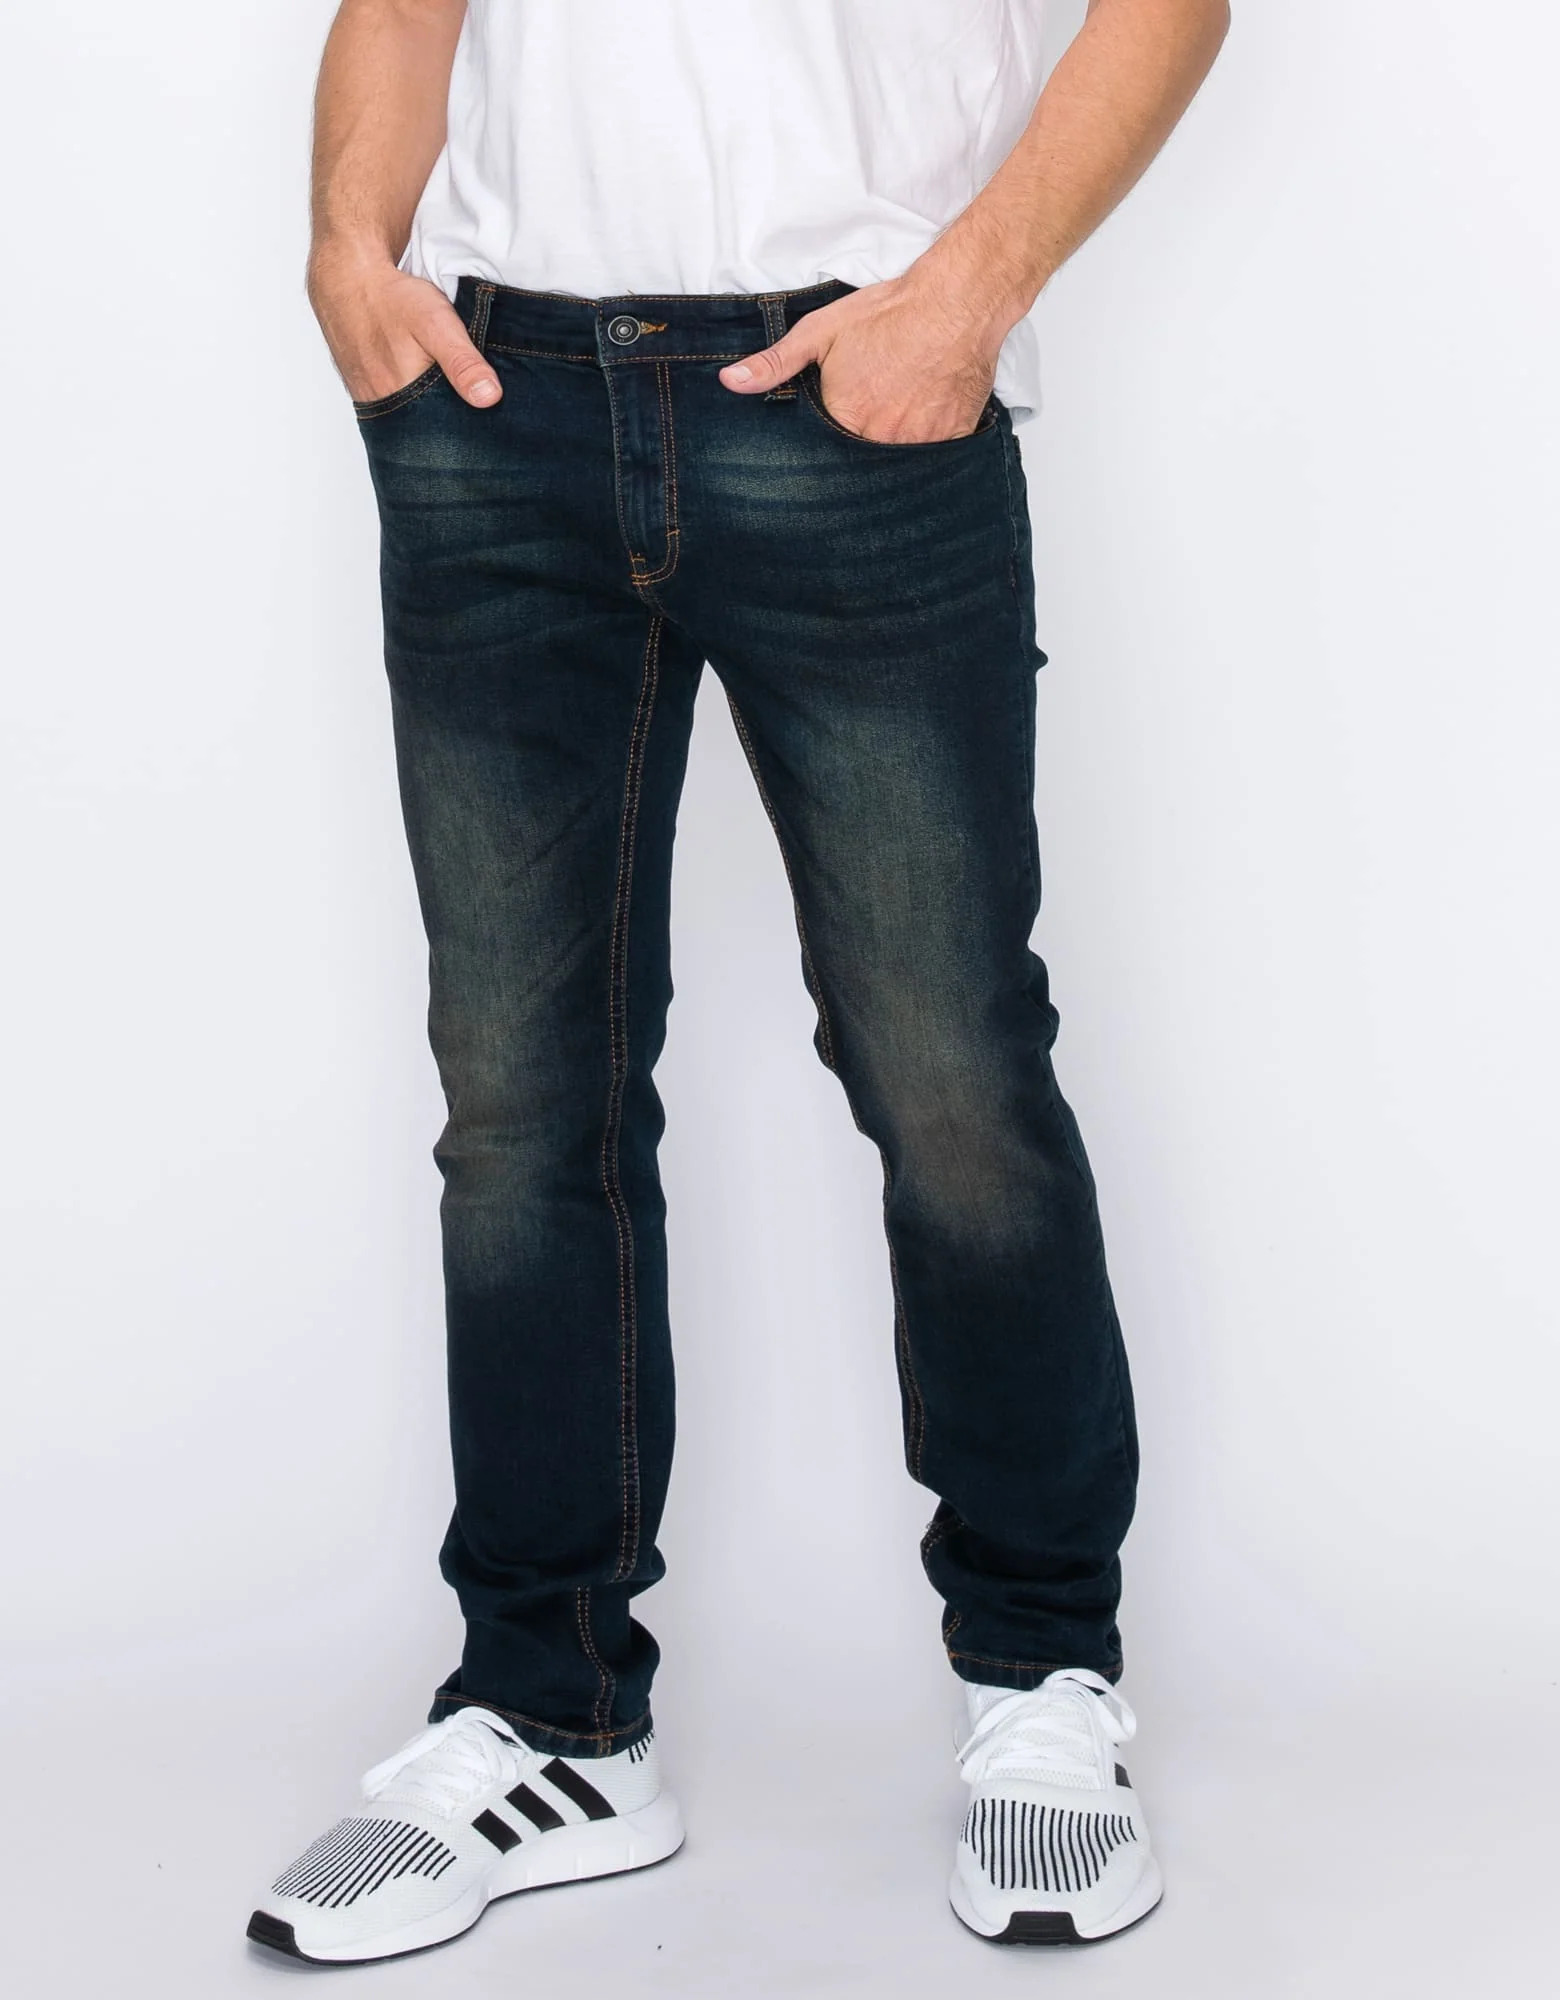 RING OF FIRE Men's 5 Pockets Slim Denim Stretch Jeans - image 5 of 11